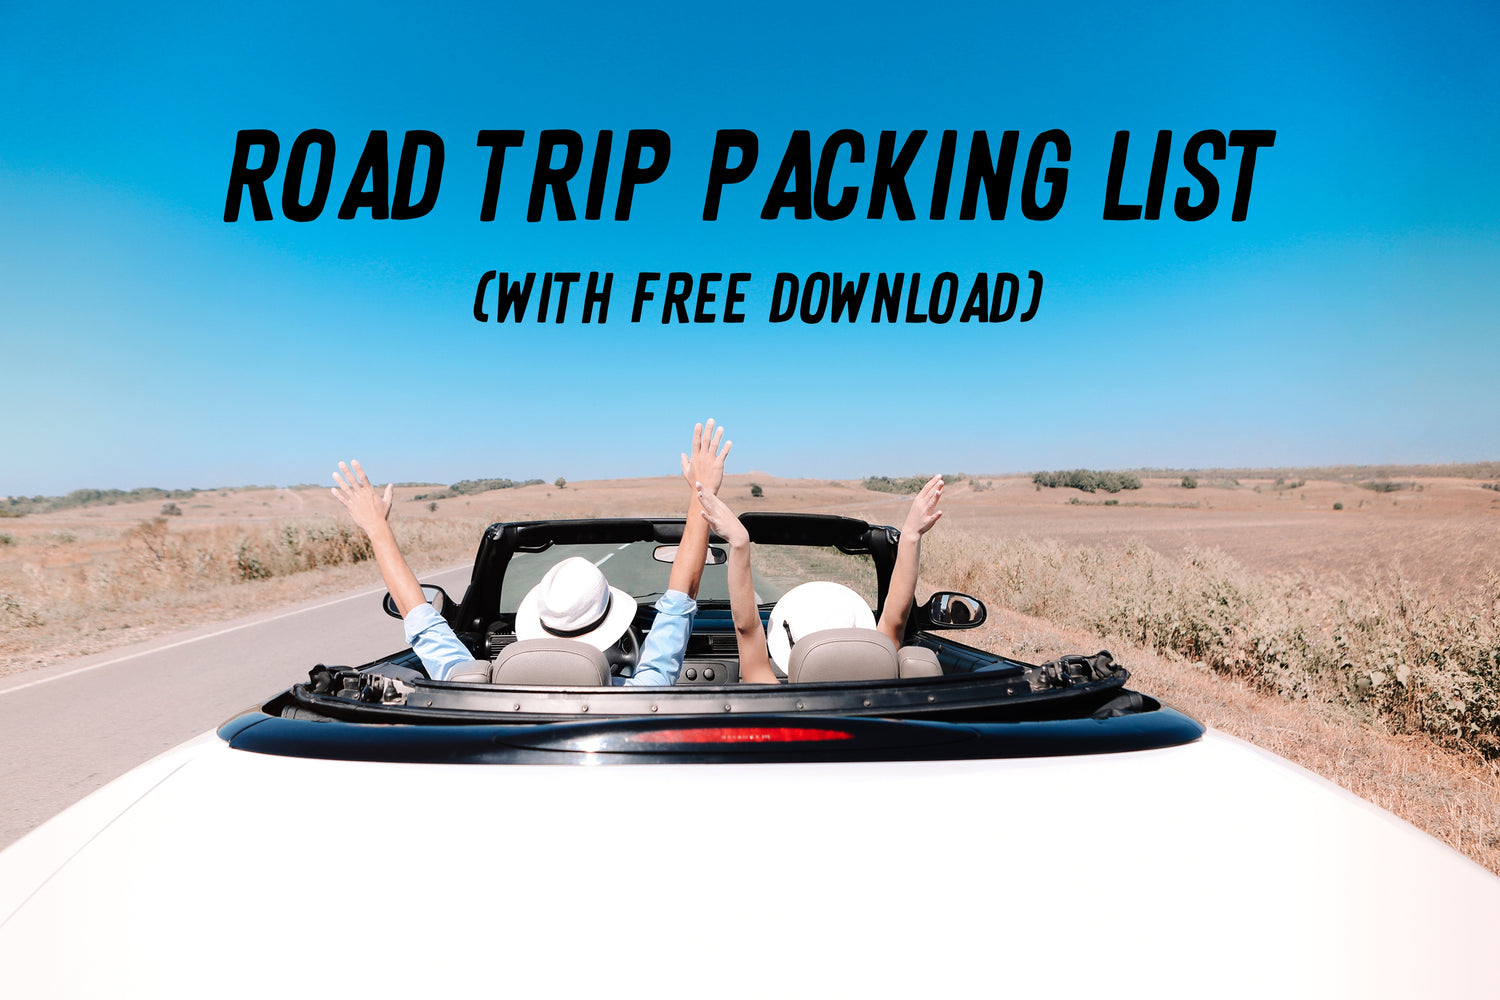 Car trip essentials  Travel essentials, Road trip kit, Road trip